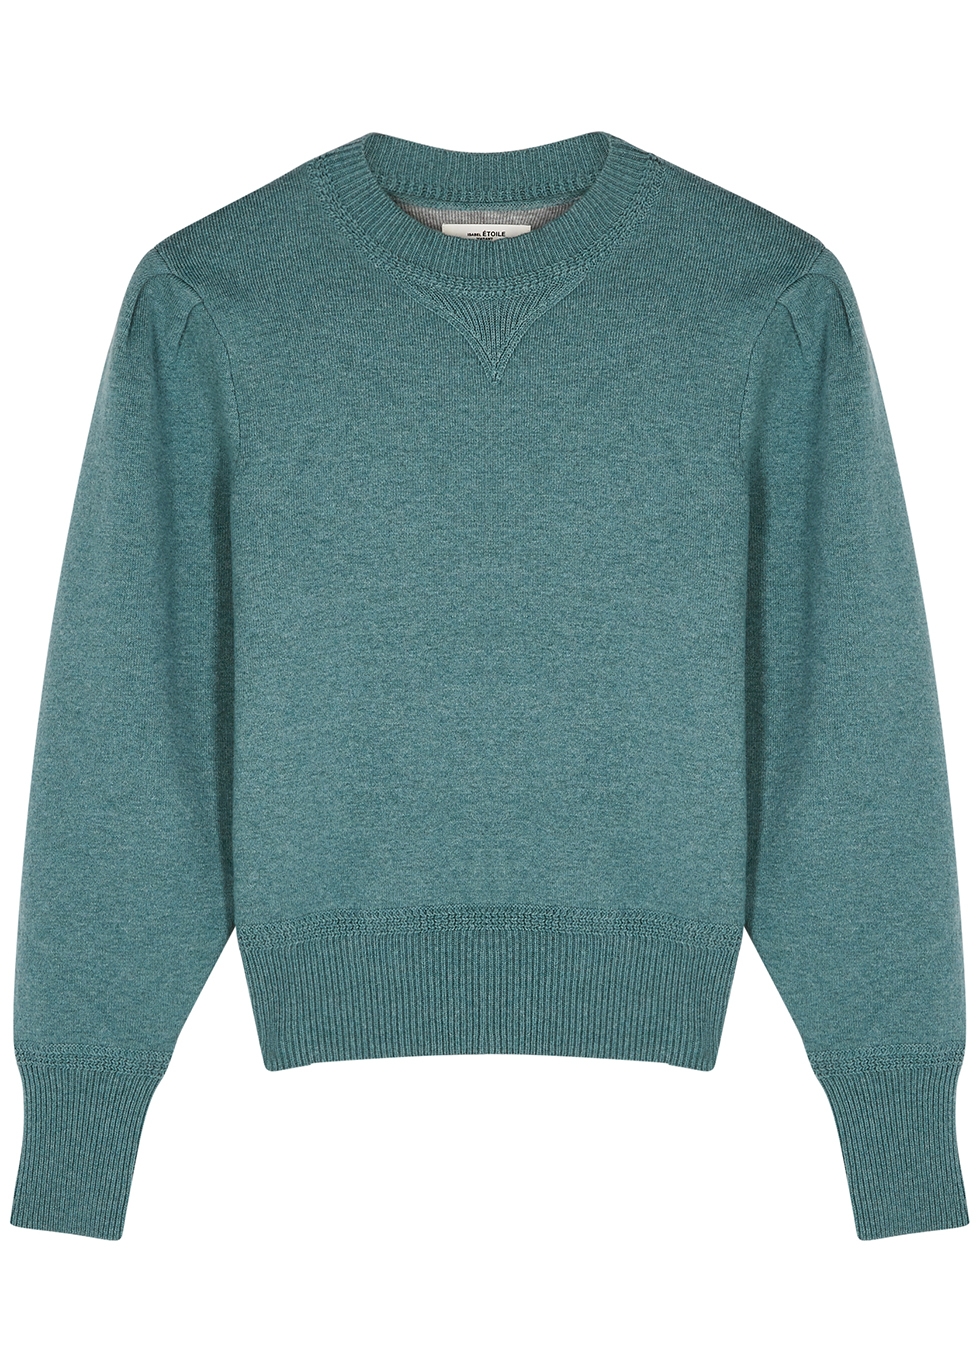 Kelaya blue knitted jumper